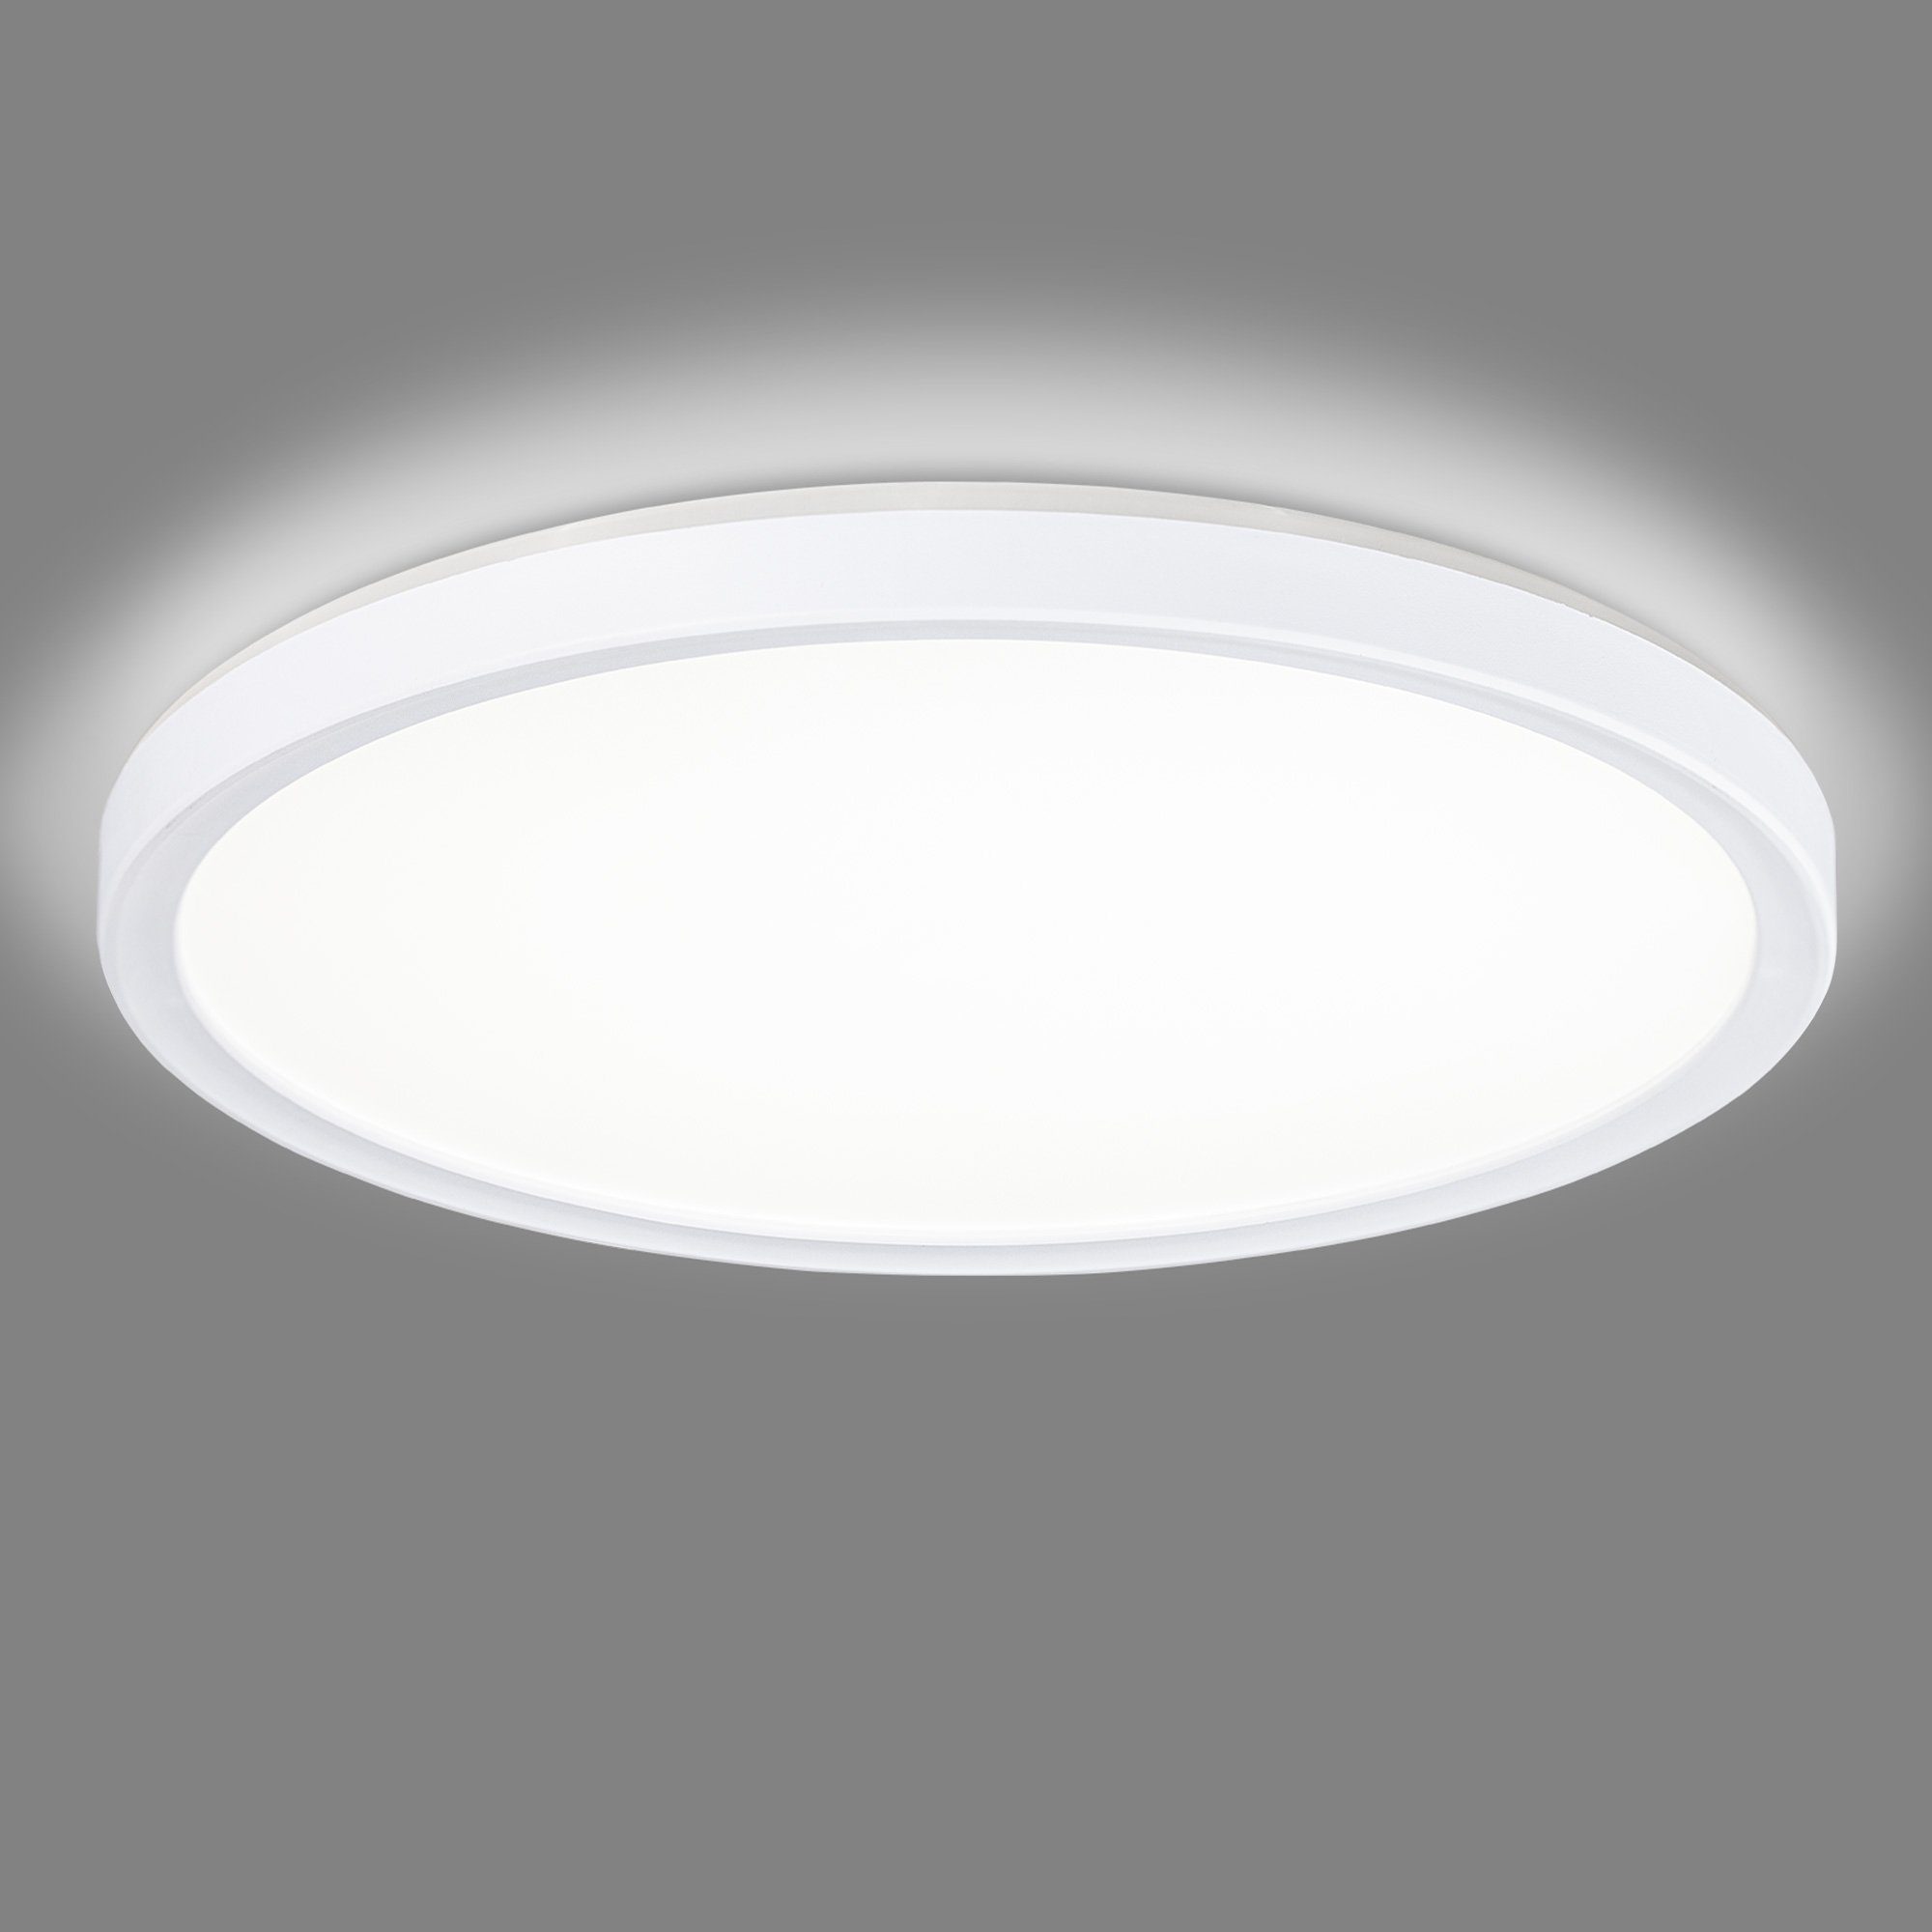 Navaris LED Deckenleuchte, LED fest integriert, LED Deckenlampe mit Hintergrundbeleuchtung - 12 Watt - ultra flach